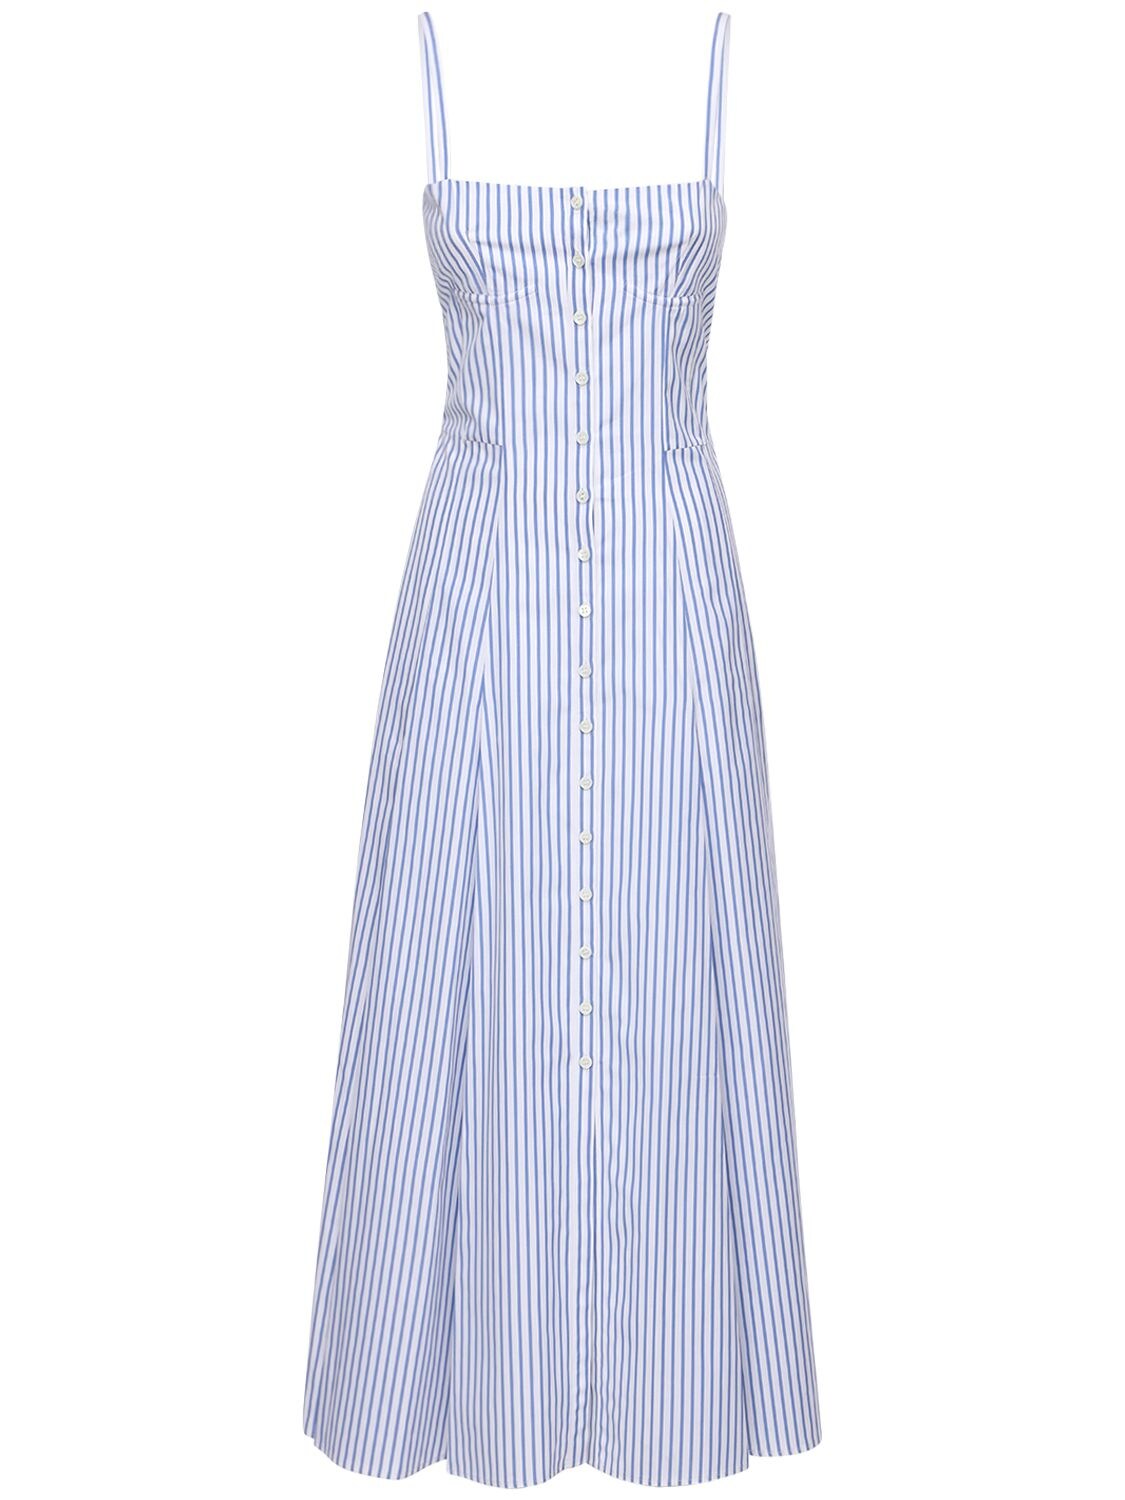 Gabriela Hearst Prudence Striped Cotton Dress In Light Blue